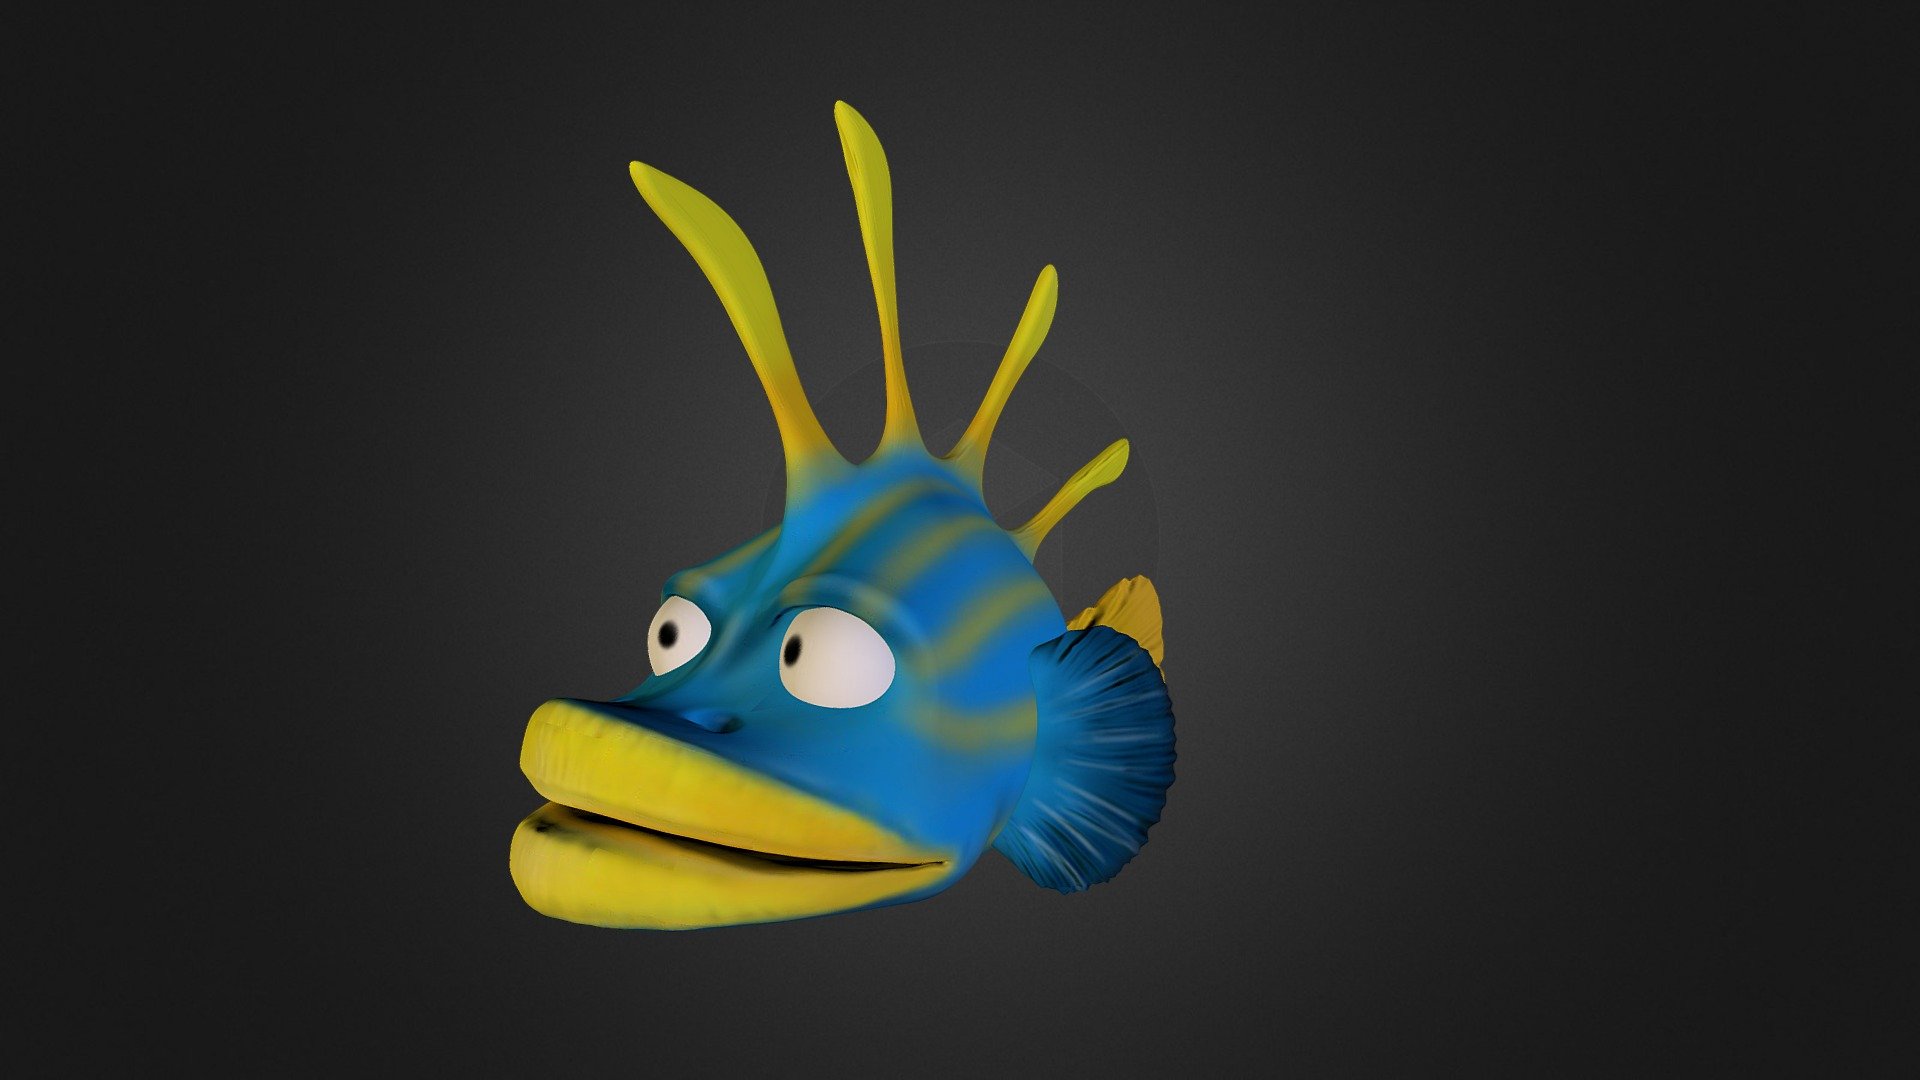 3D Cartoon Fish created for a school advertisment - Cartoon Fish - 3D model by benoitvaldes 3d model